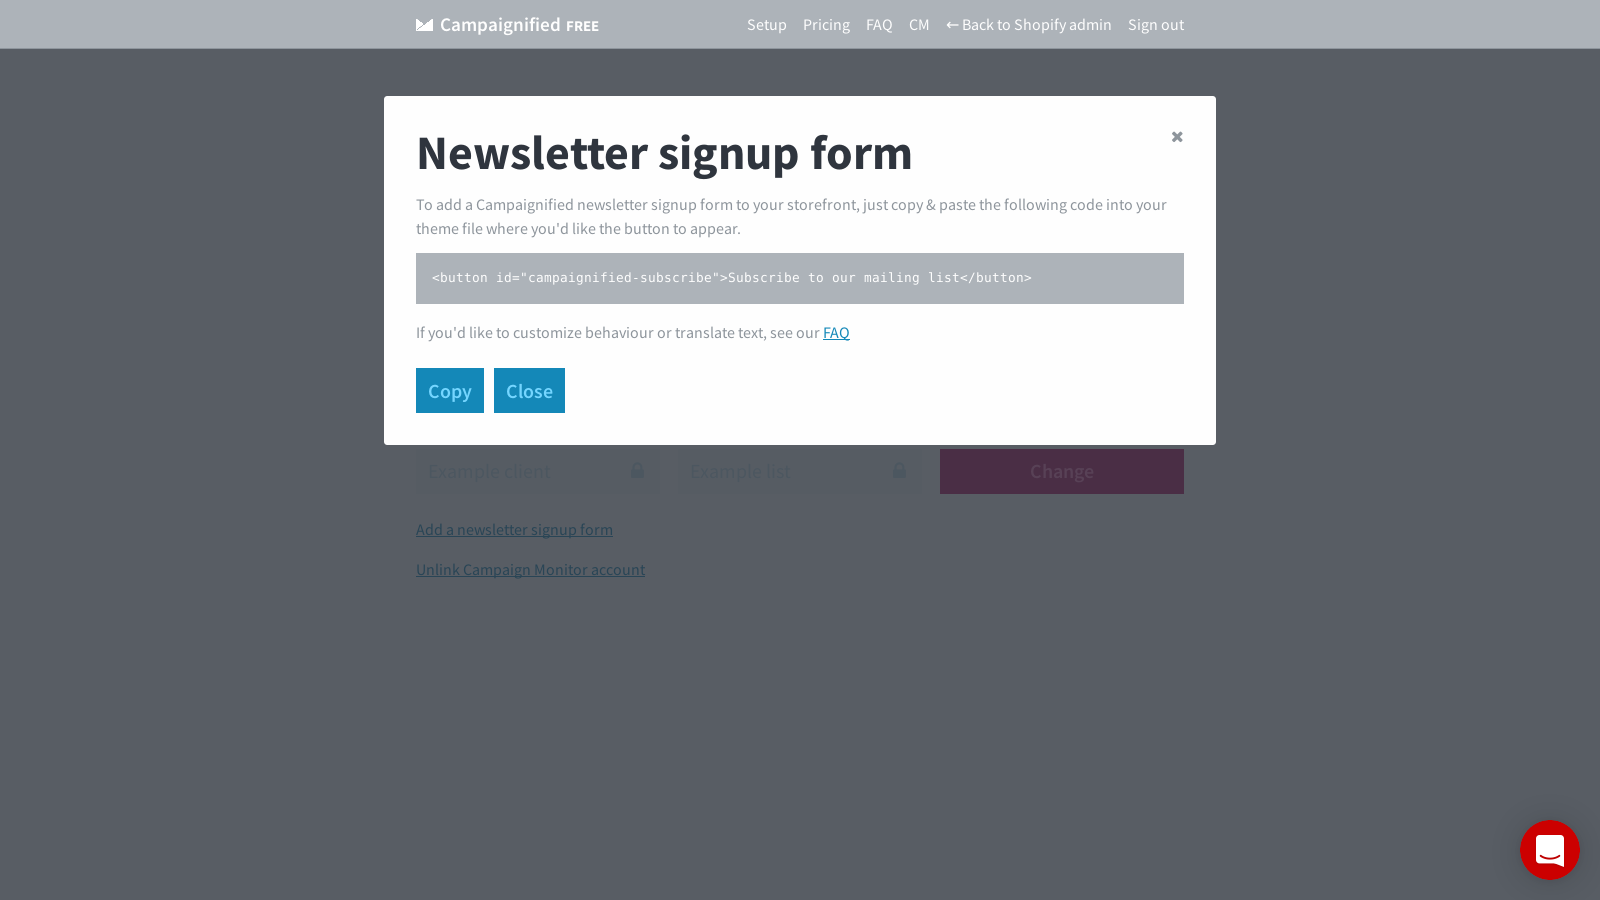 Adding a newsletter signup form